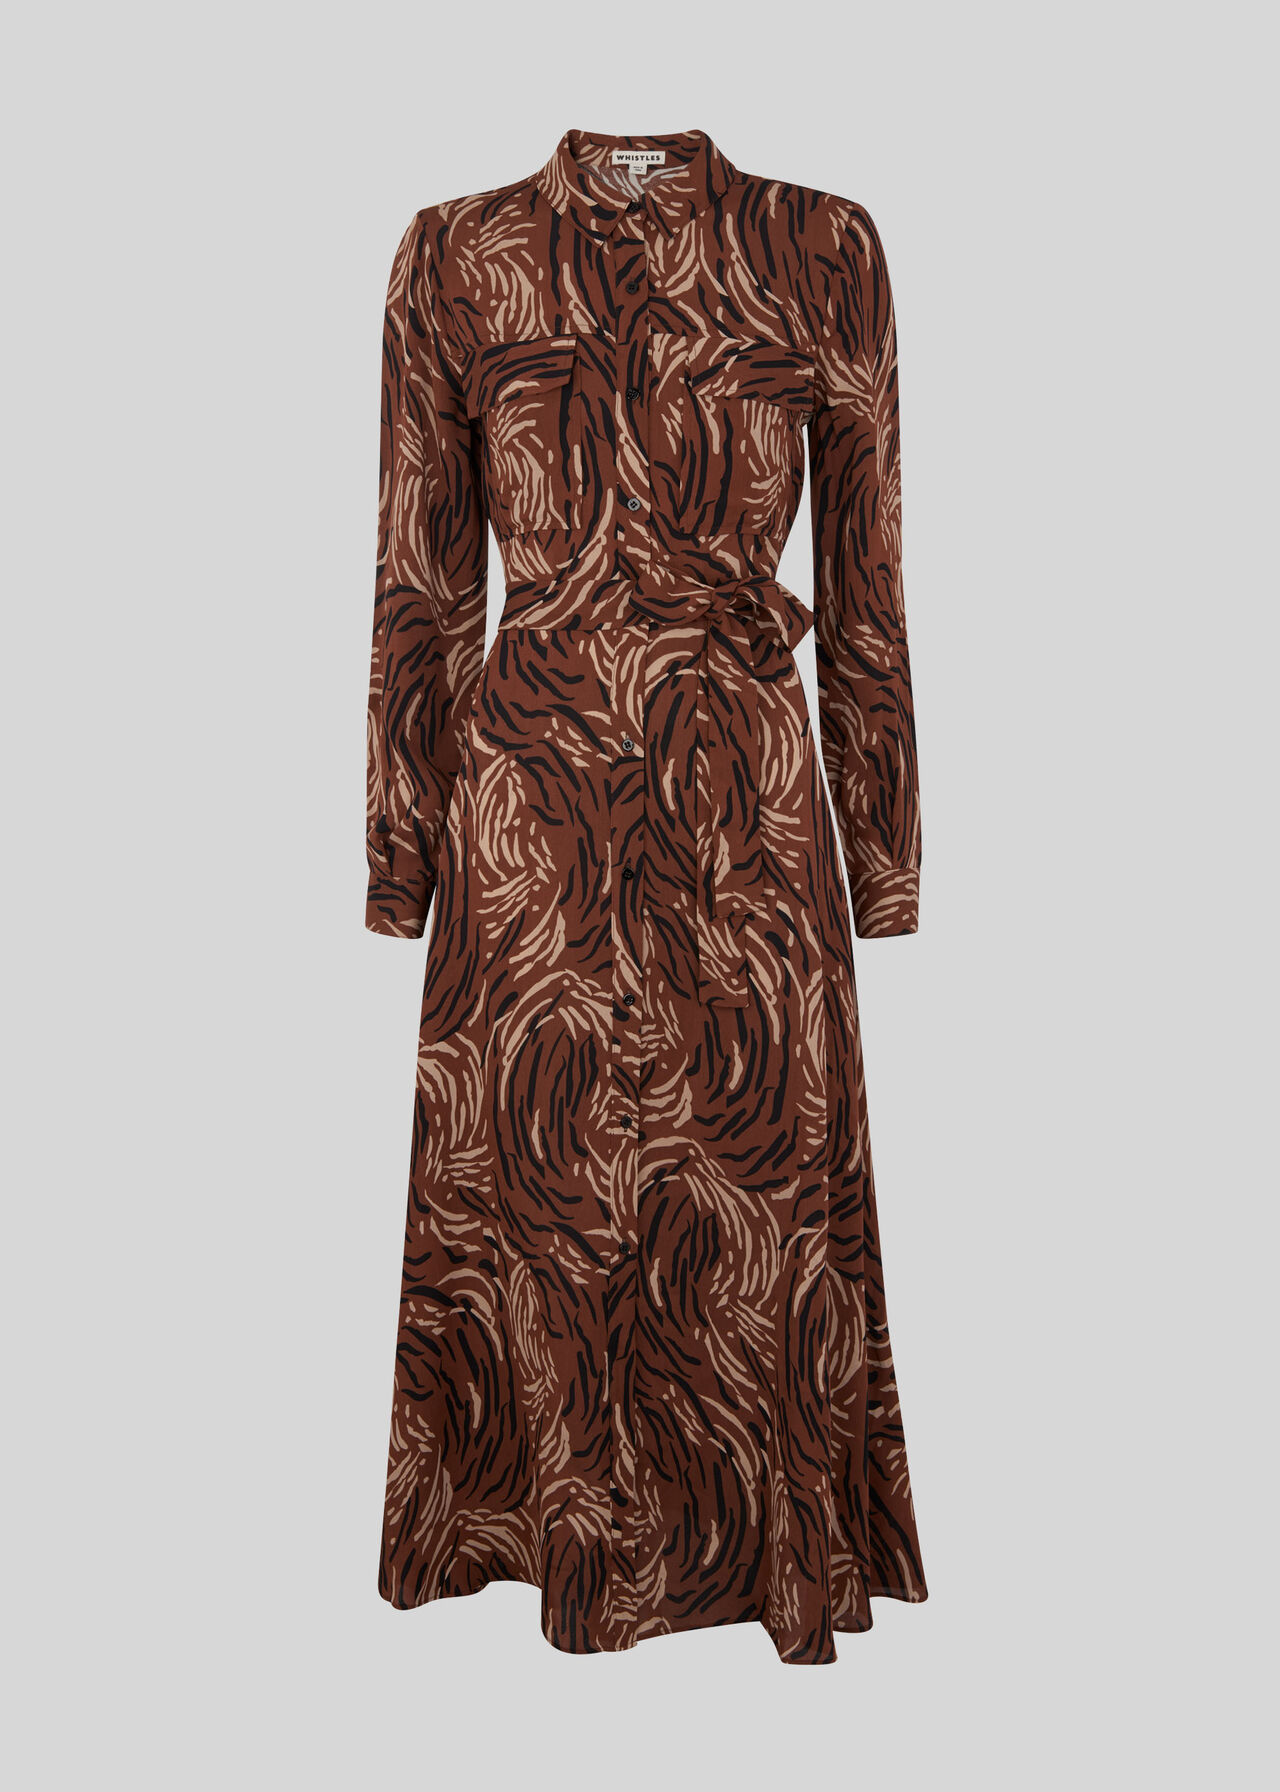 Elfrida Reed Shirt Dress Brown/Multi